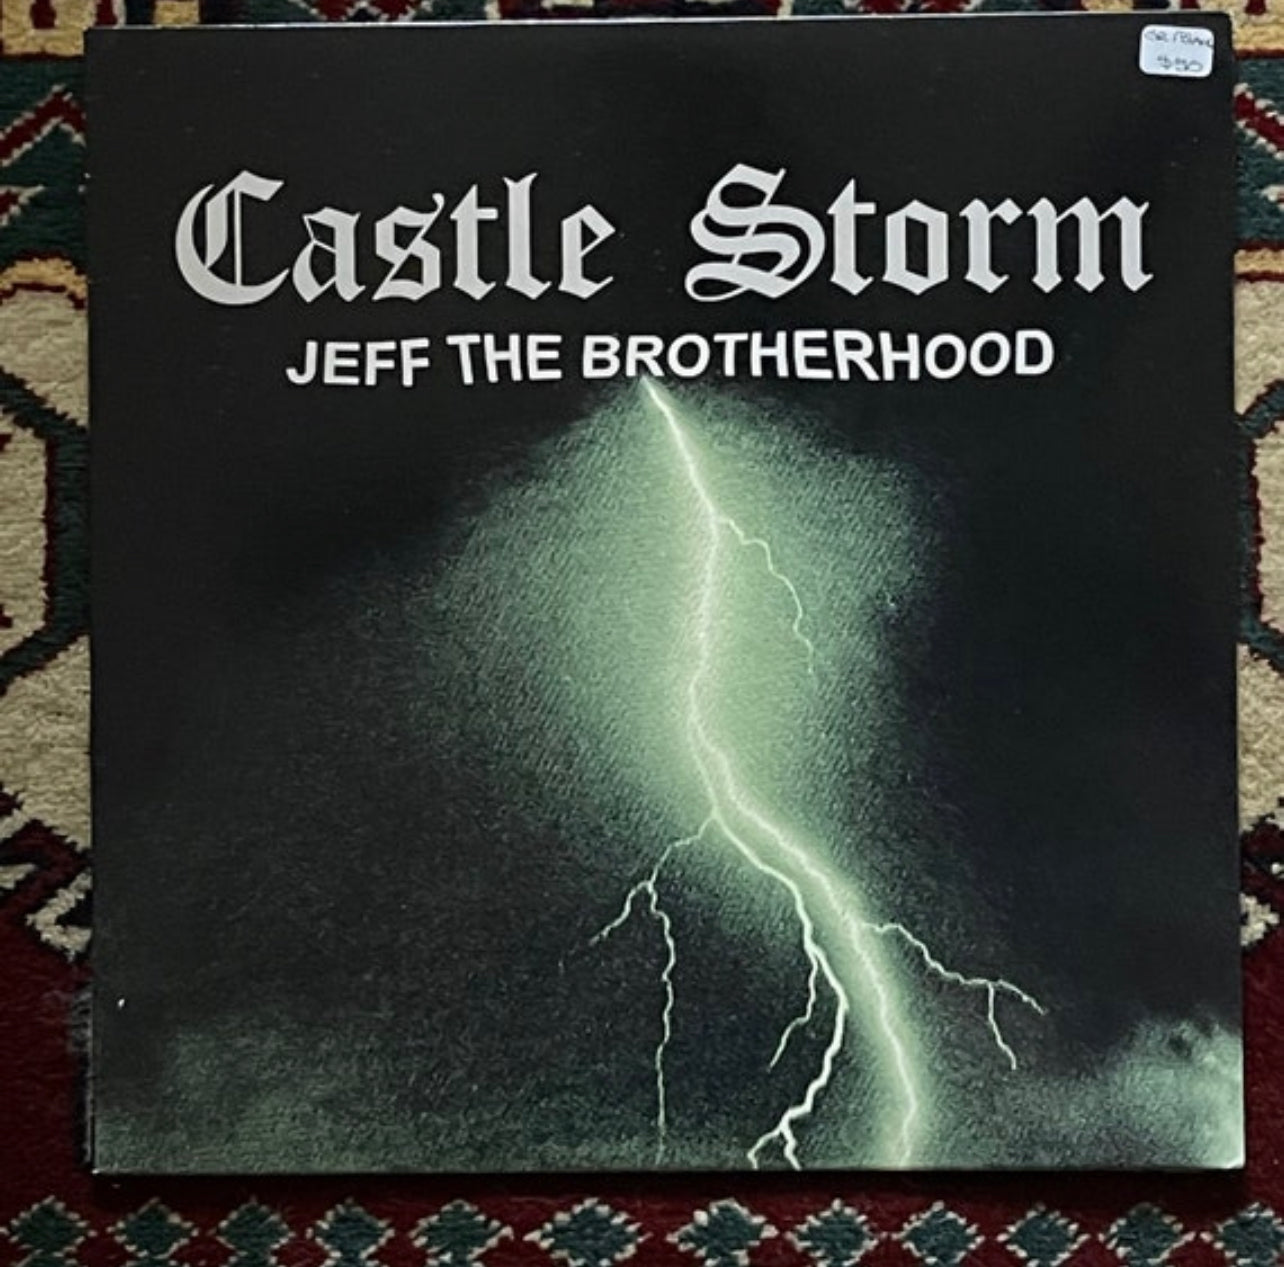 Jeff the Brotherhood-Castle Storm